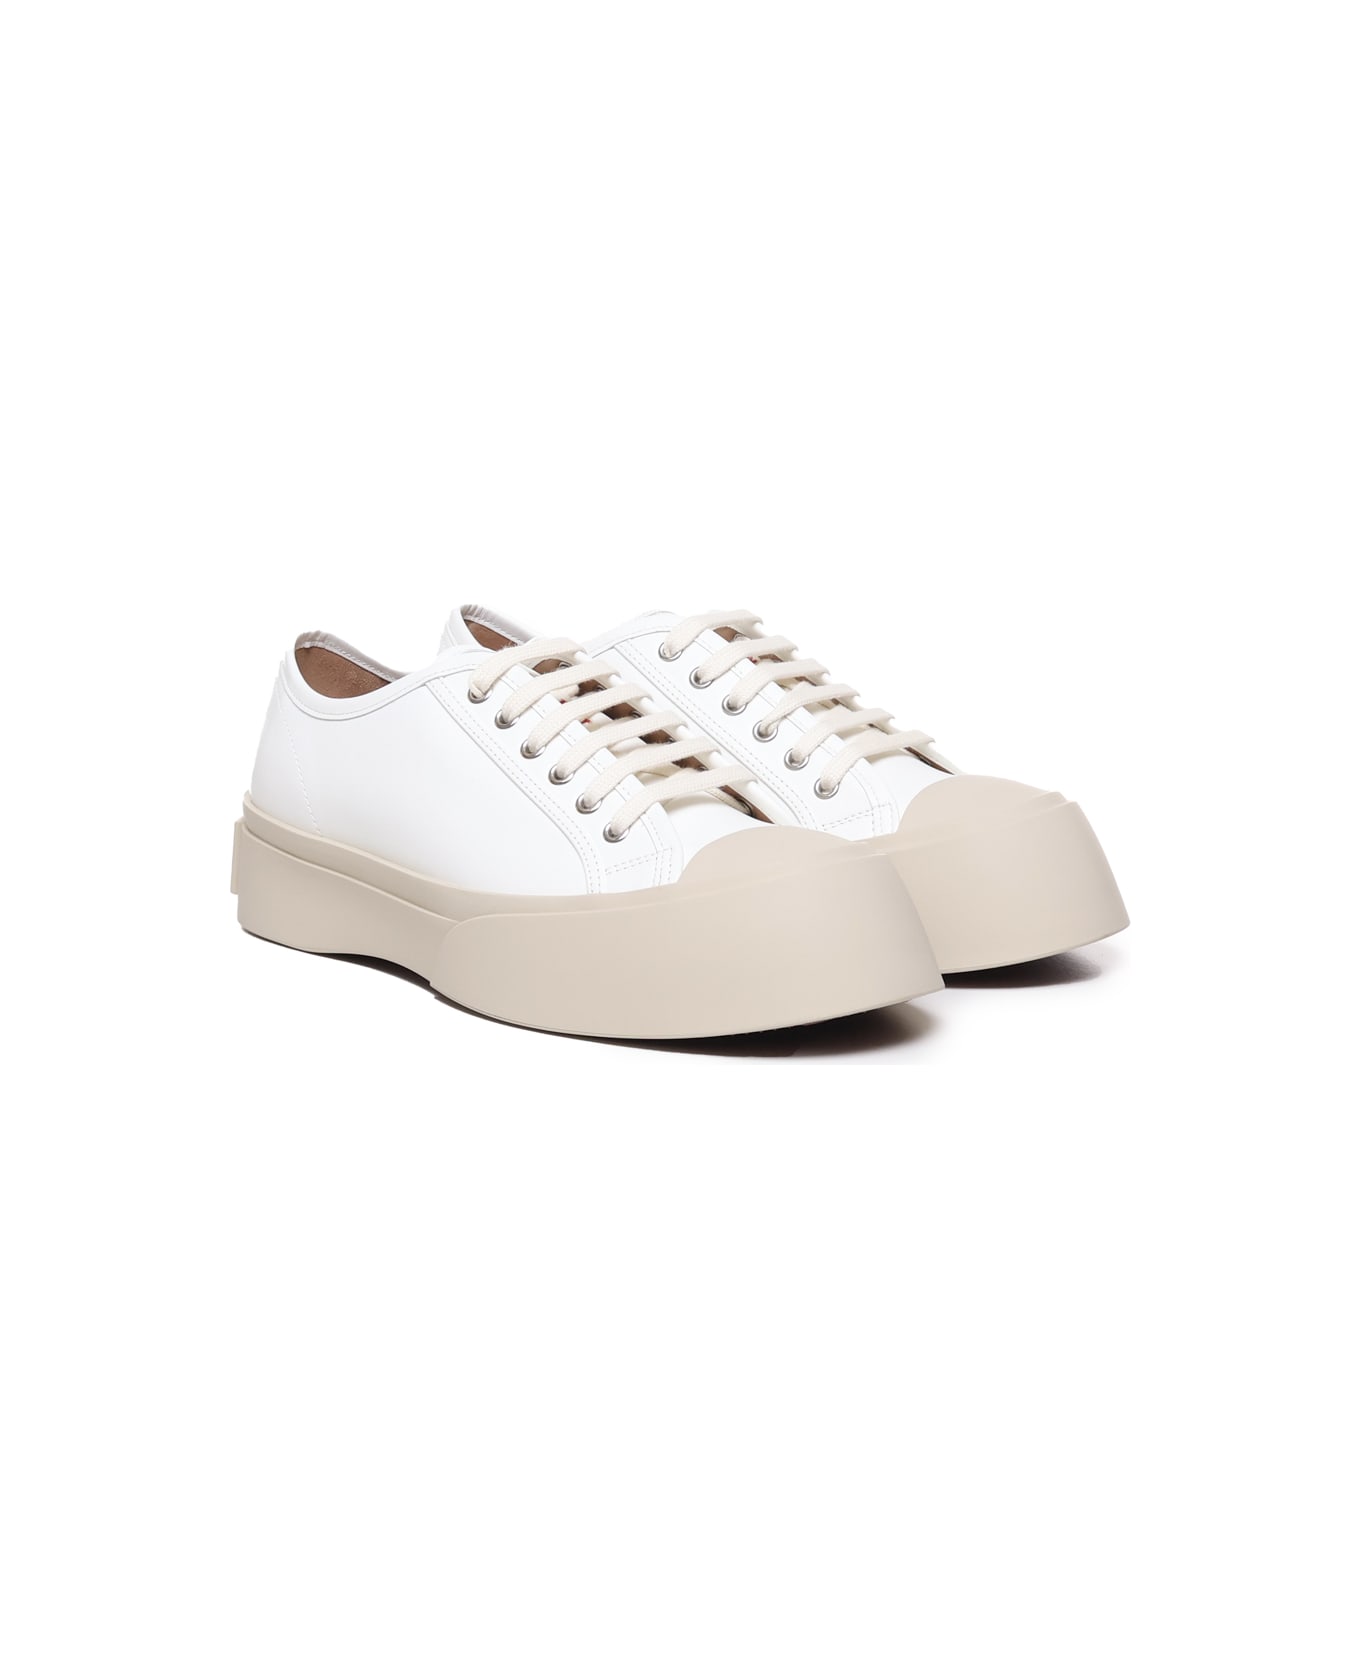 Marni Pablo Sneaker In Nappa Leather - White スニーカー